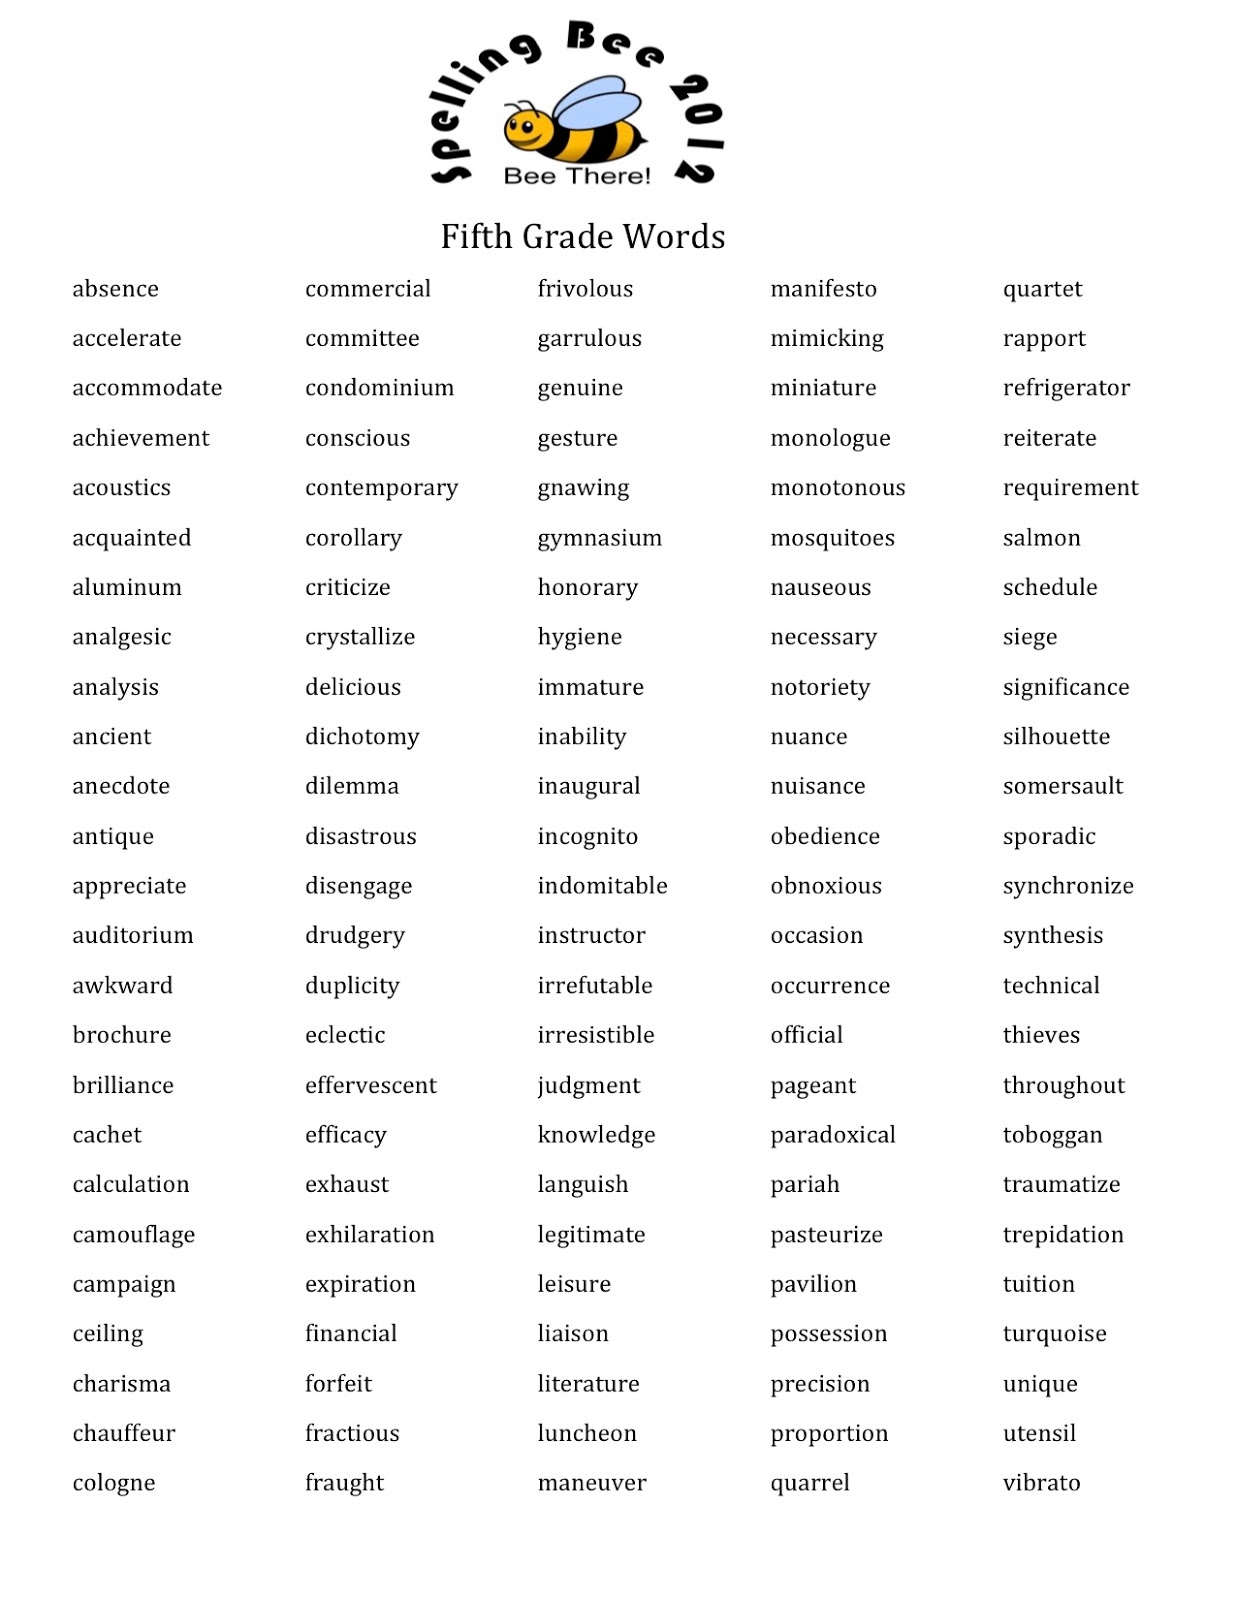 5th Grade Spelling Words List Image